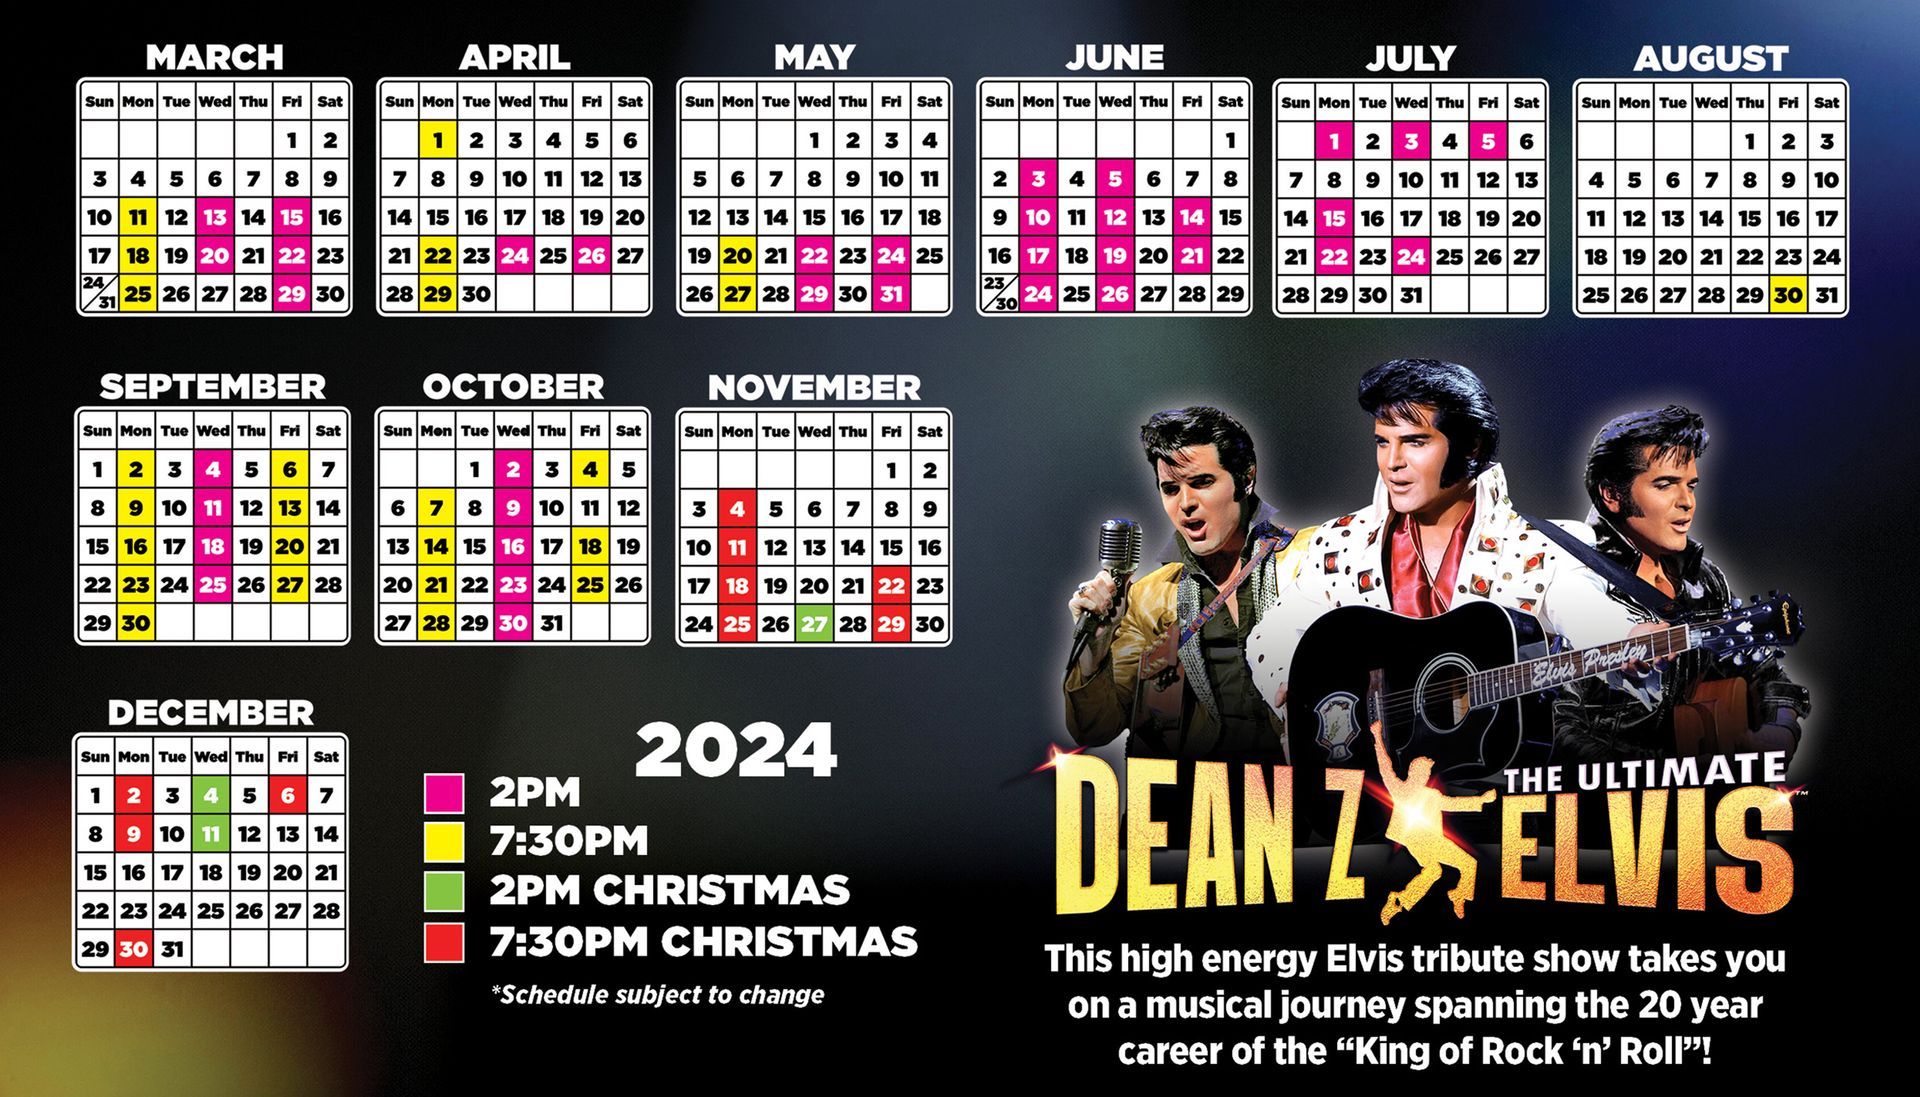 Dean Z Elvis seating chart